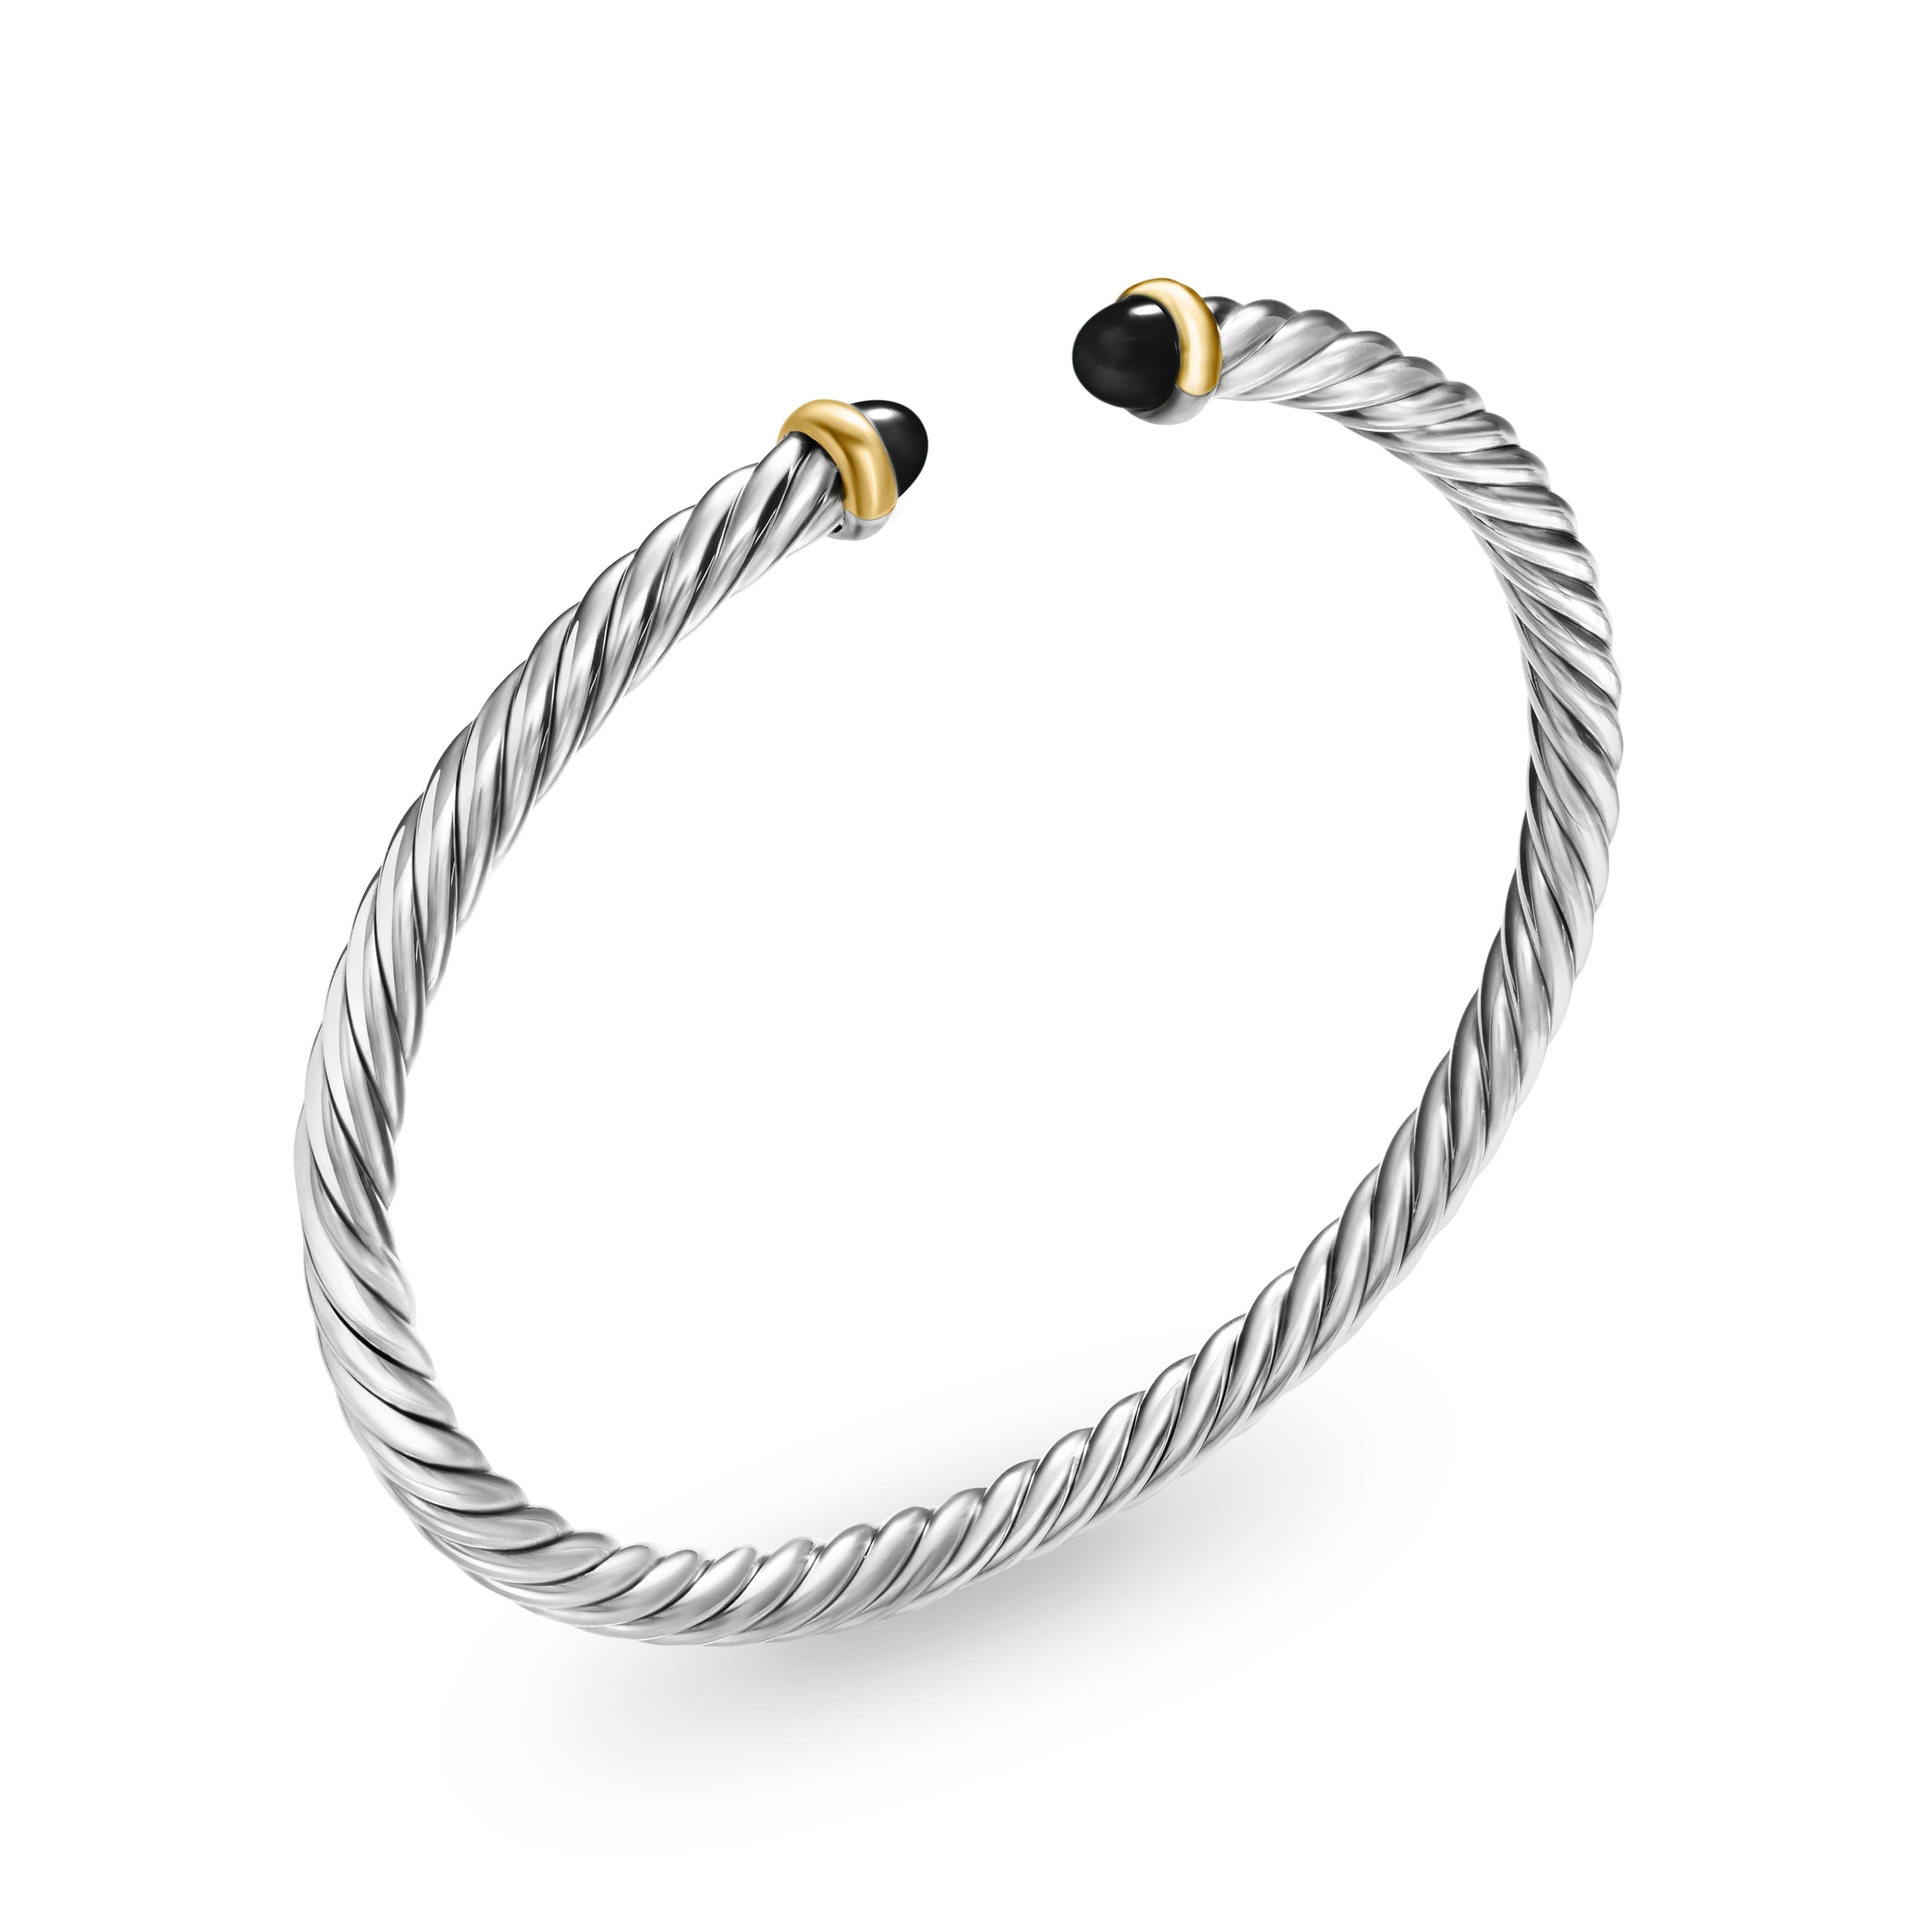 David Yurman Cable Flex Sterling Silver Bracelet with Black Onyx, Size Medium 1